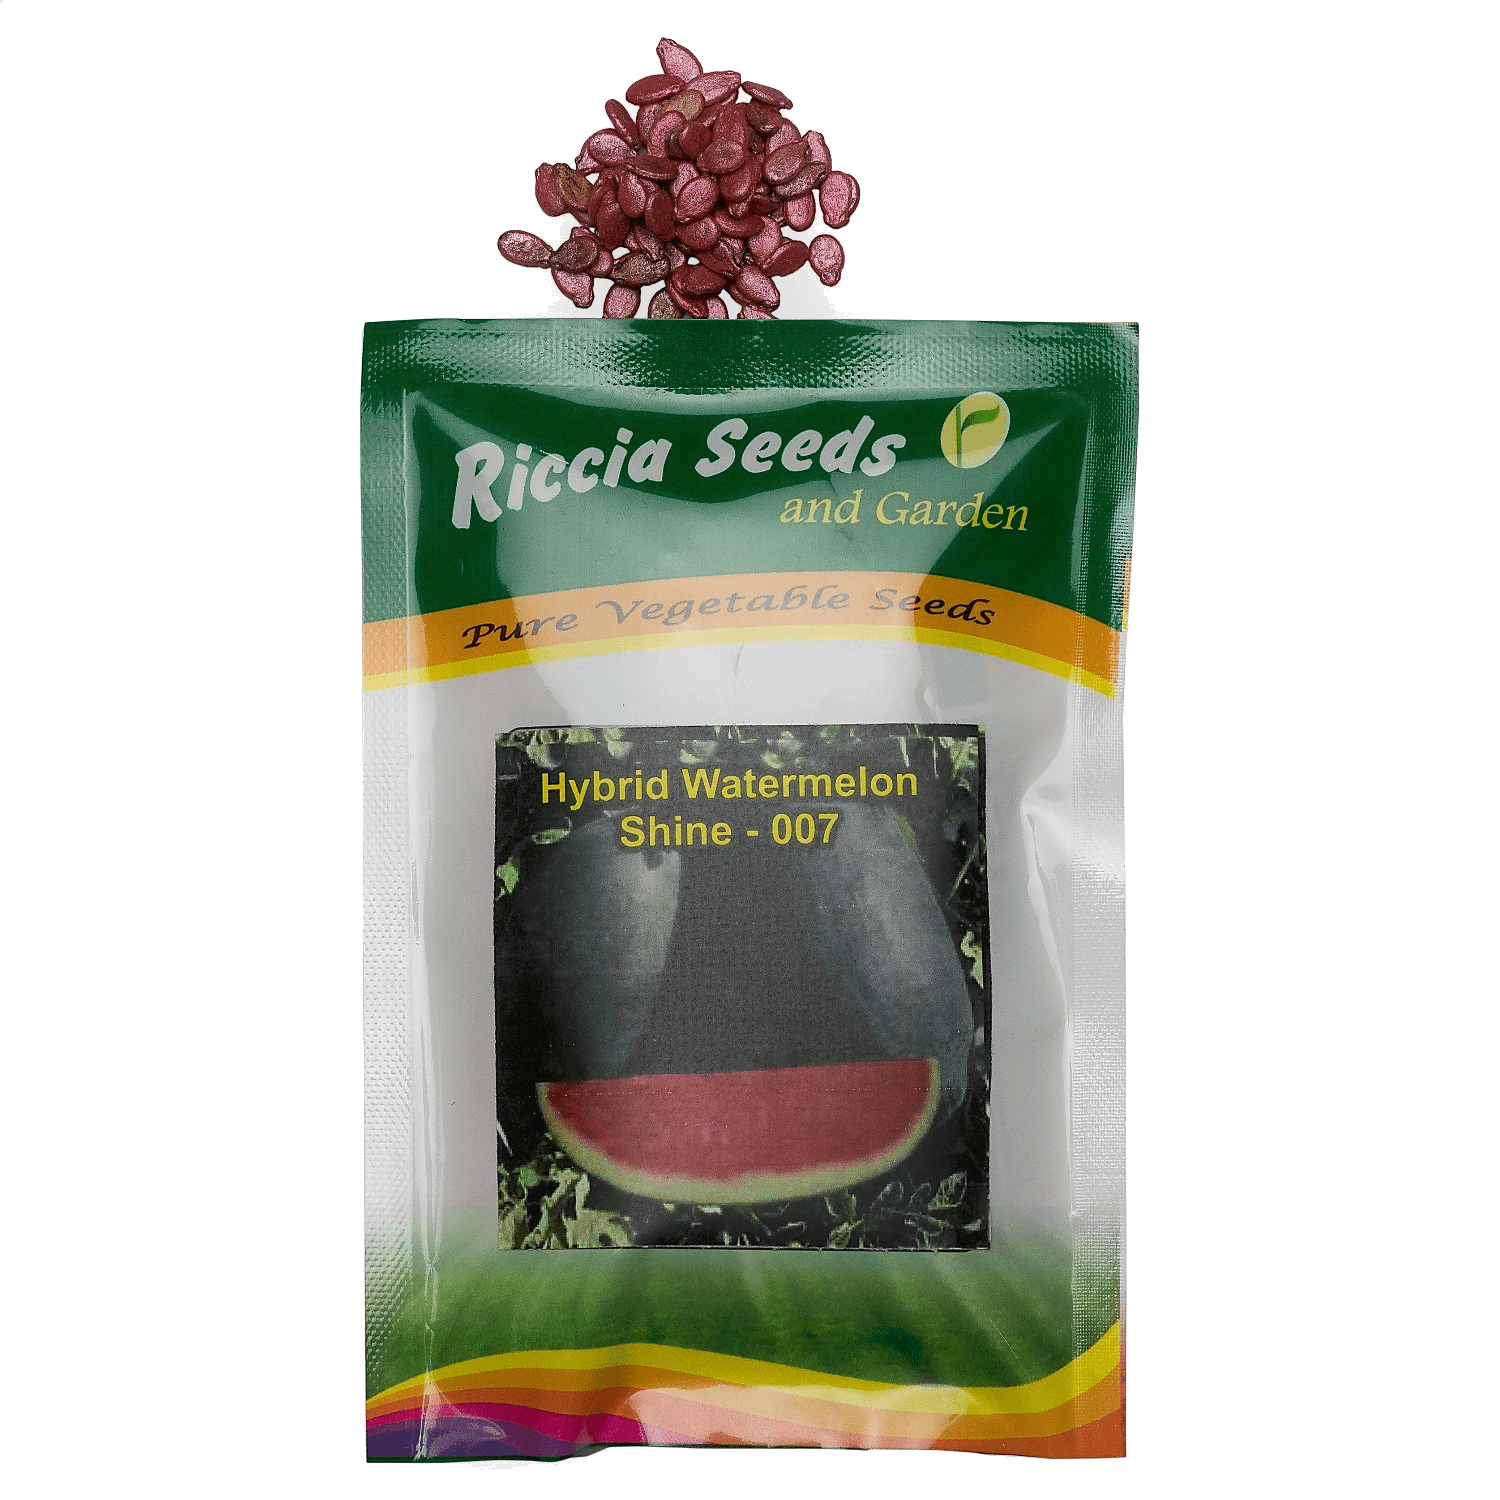 Hybrid Watermelon – Shine 007 Seeds